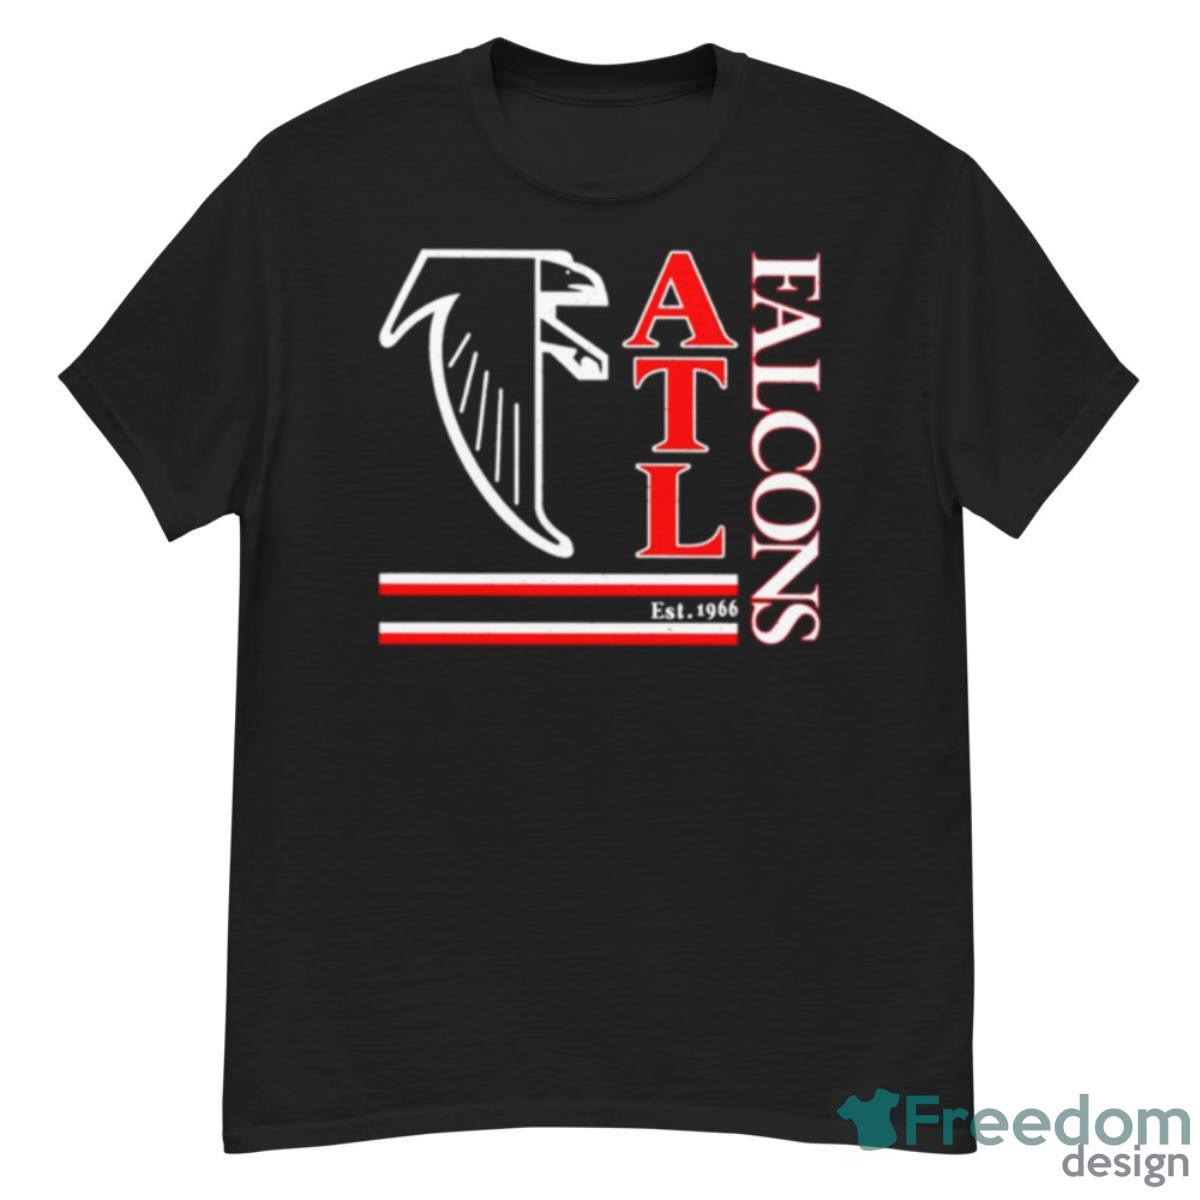 Taylor Heinicke wearing Atl Falcons est 1966 shirt - G500 Men’s Classic T-Shirt